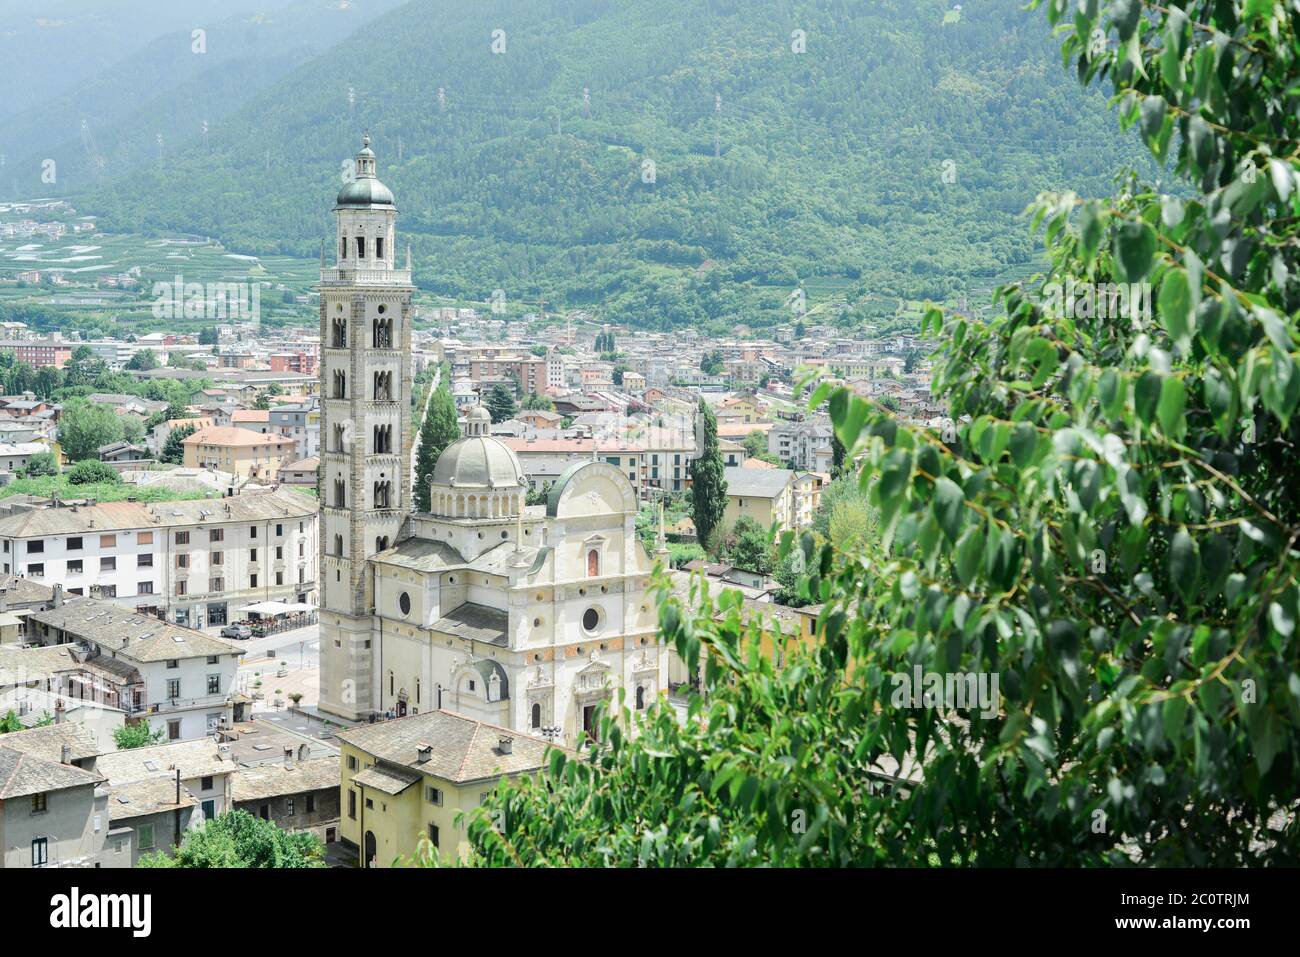 Sanctuary of the Madonna of Tirano, in Tirano, Italy Stock Photo